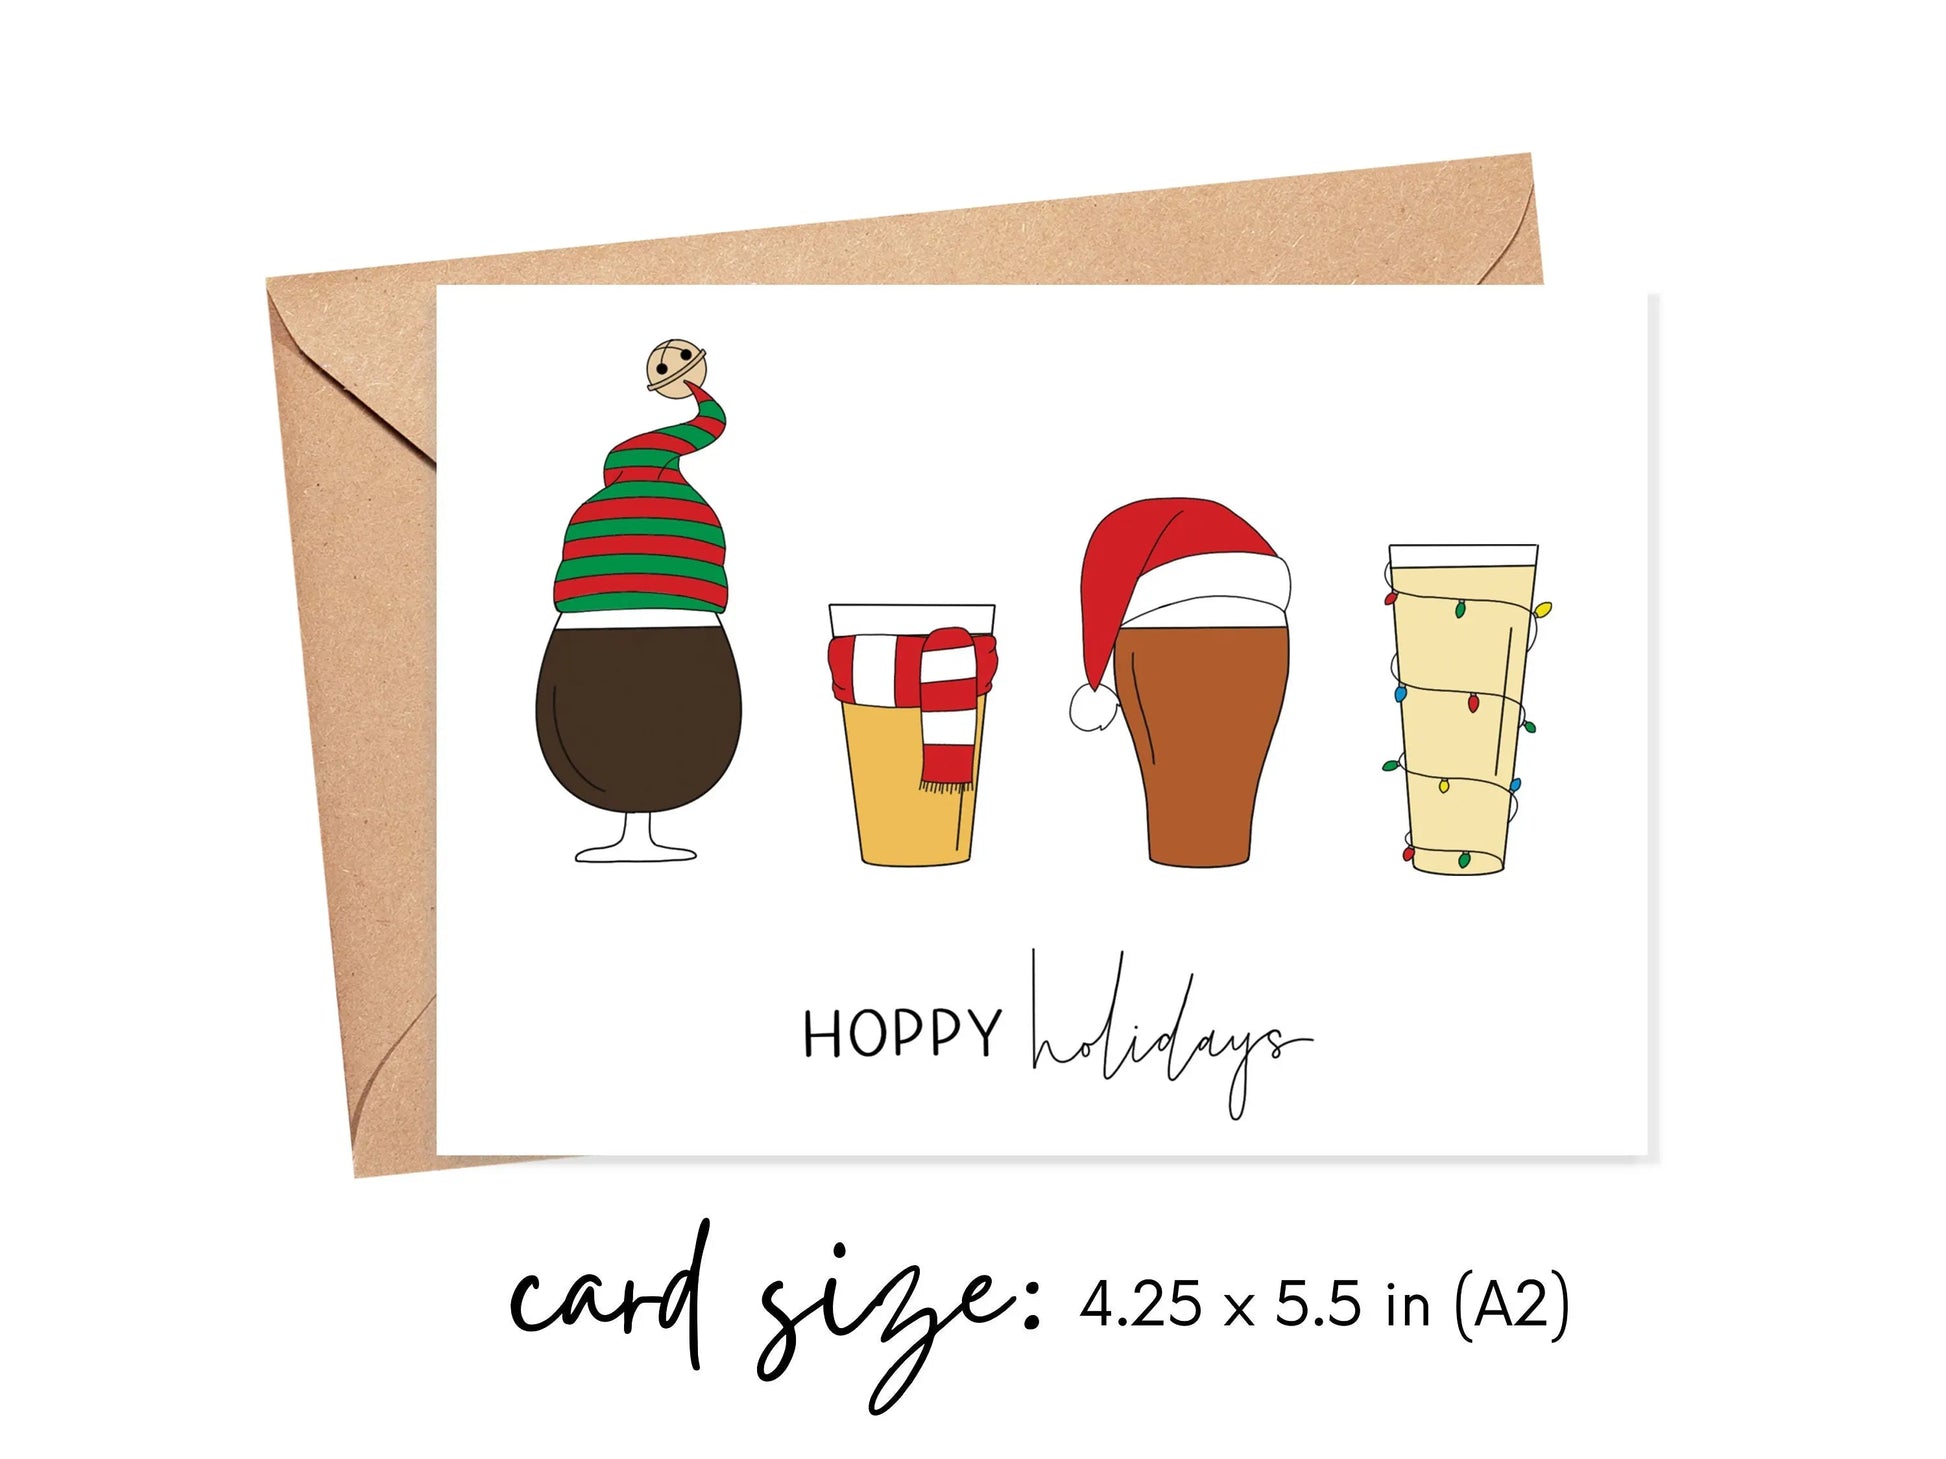 Hoppy Holidays Card Simply Happy Cards